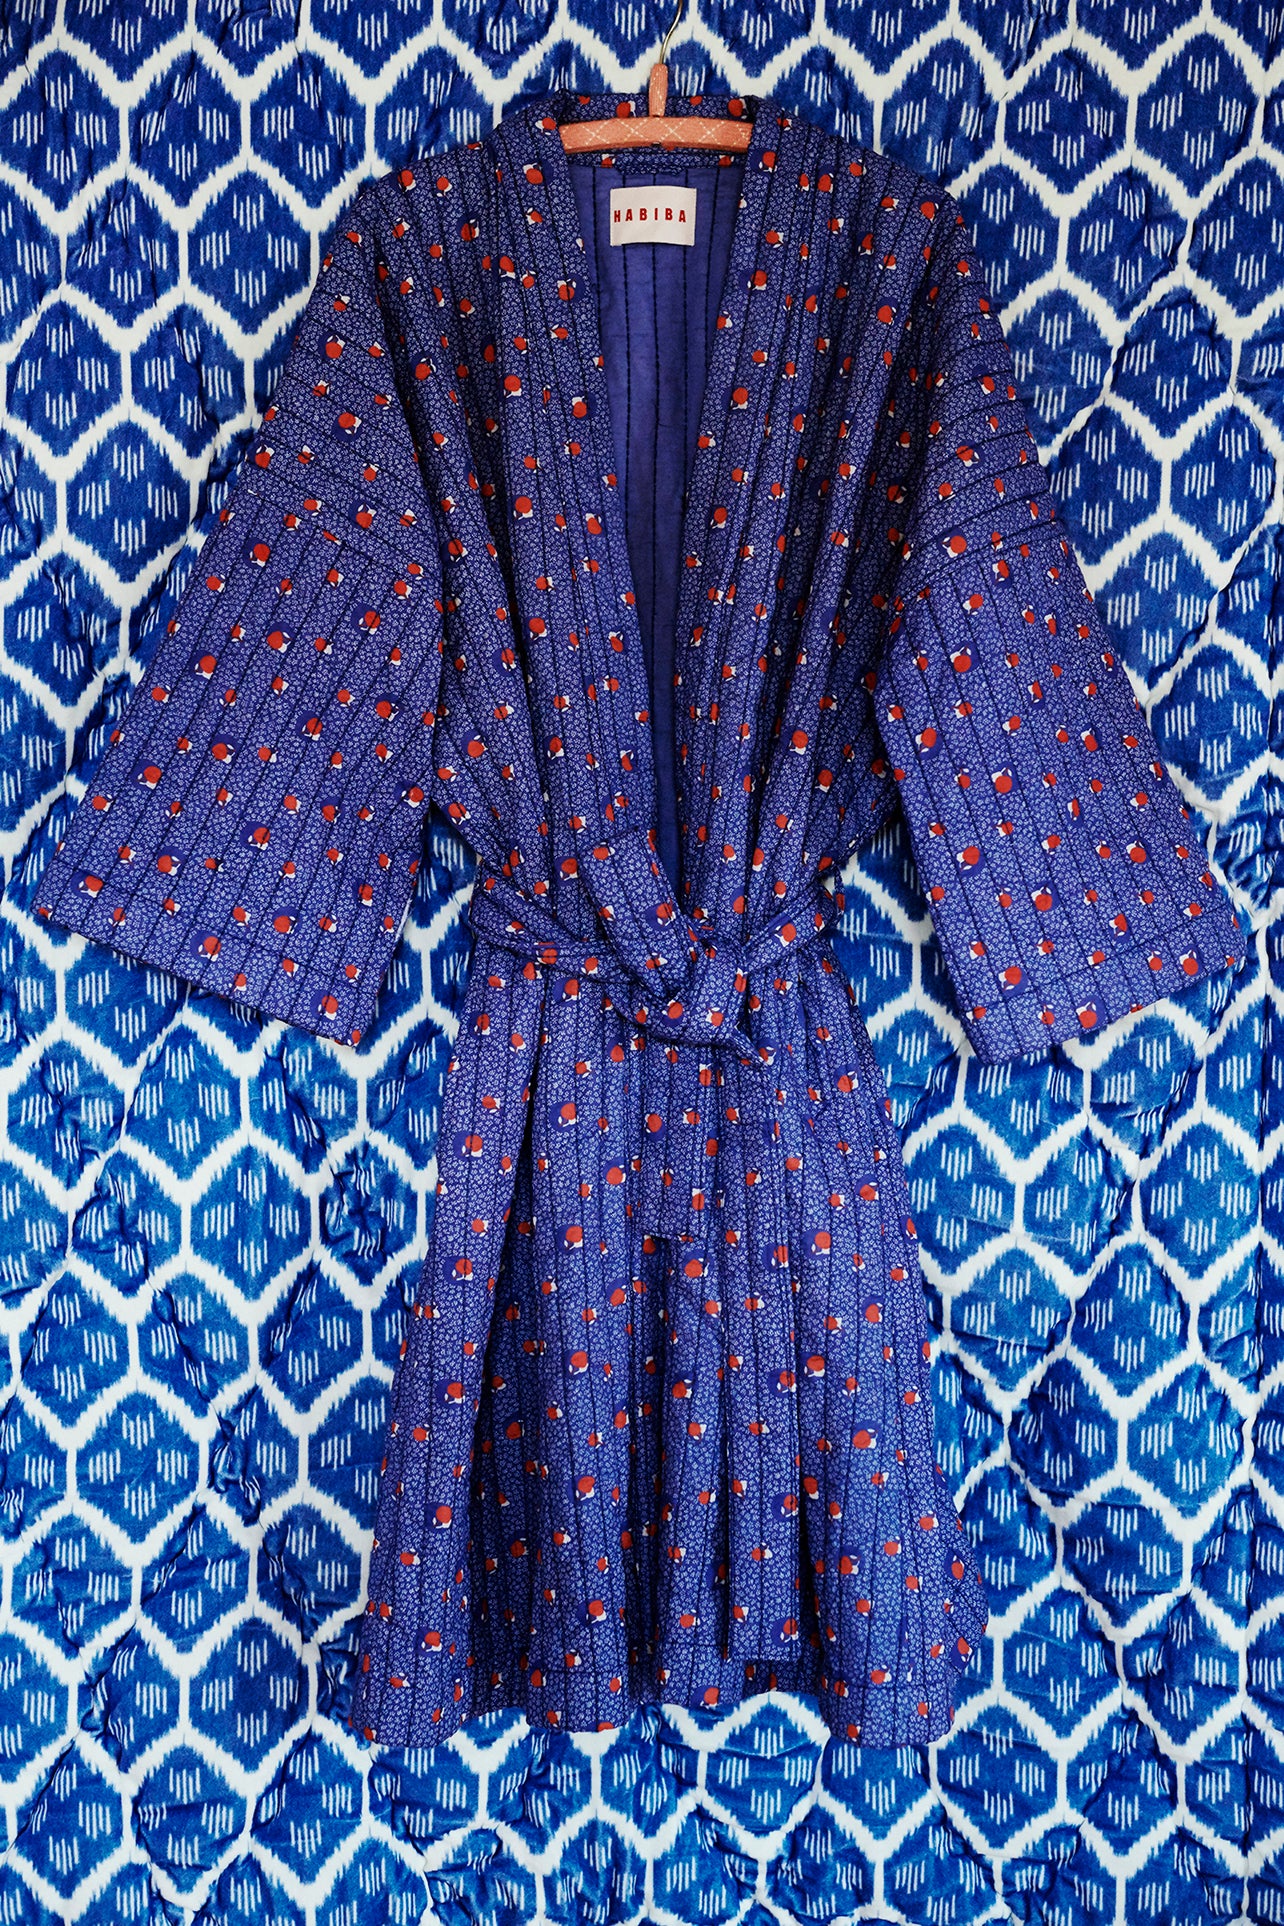 HABIBA SAKURA QUILTED KIMONO Kimono JAPAN BLUE